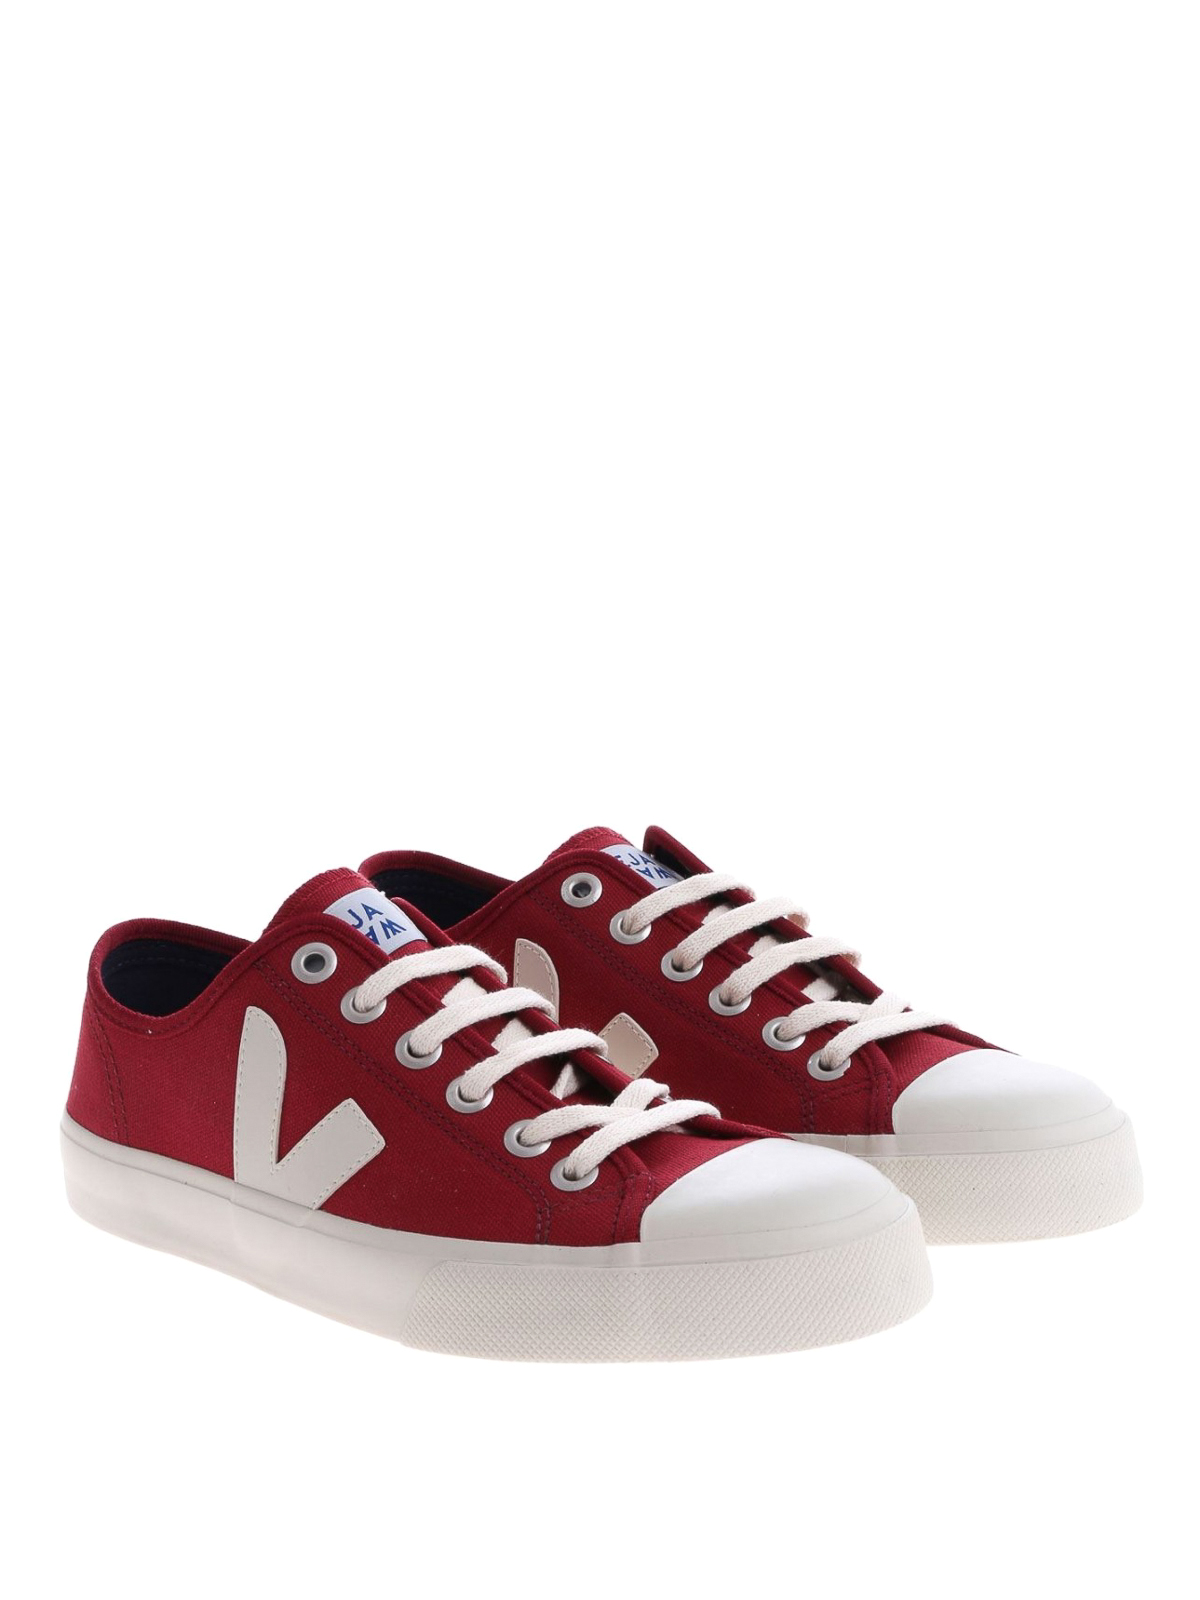 Veja - Wata red organic cotton sneakers 